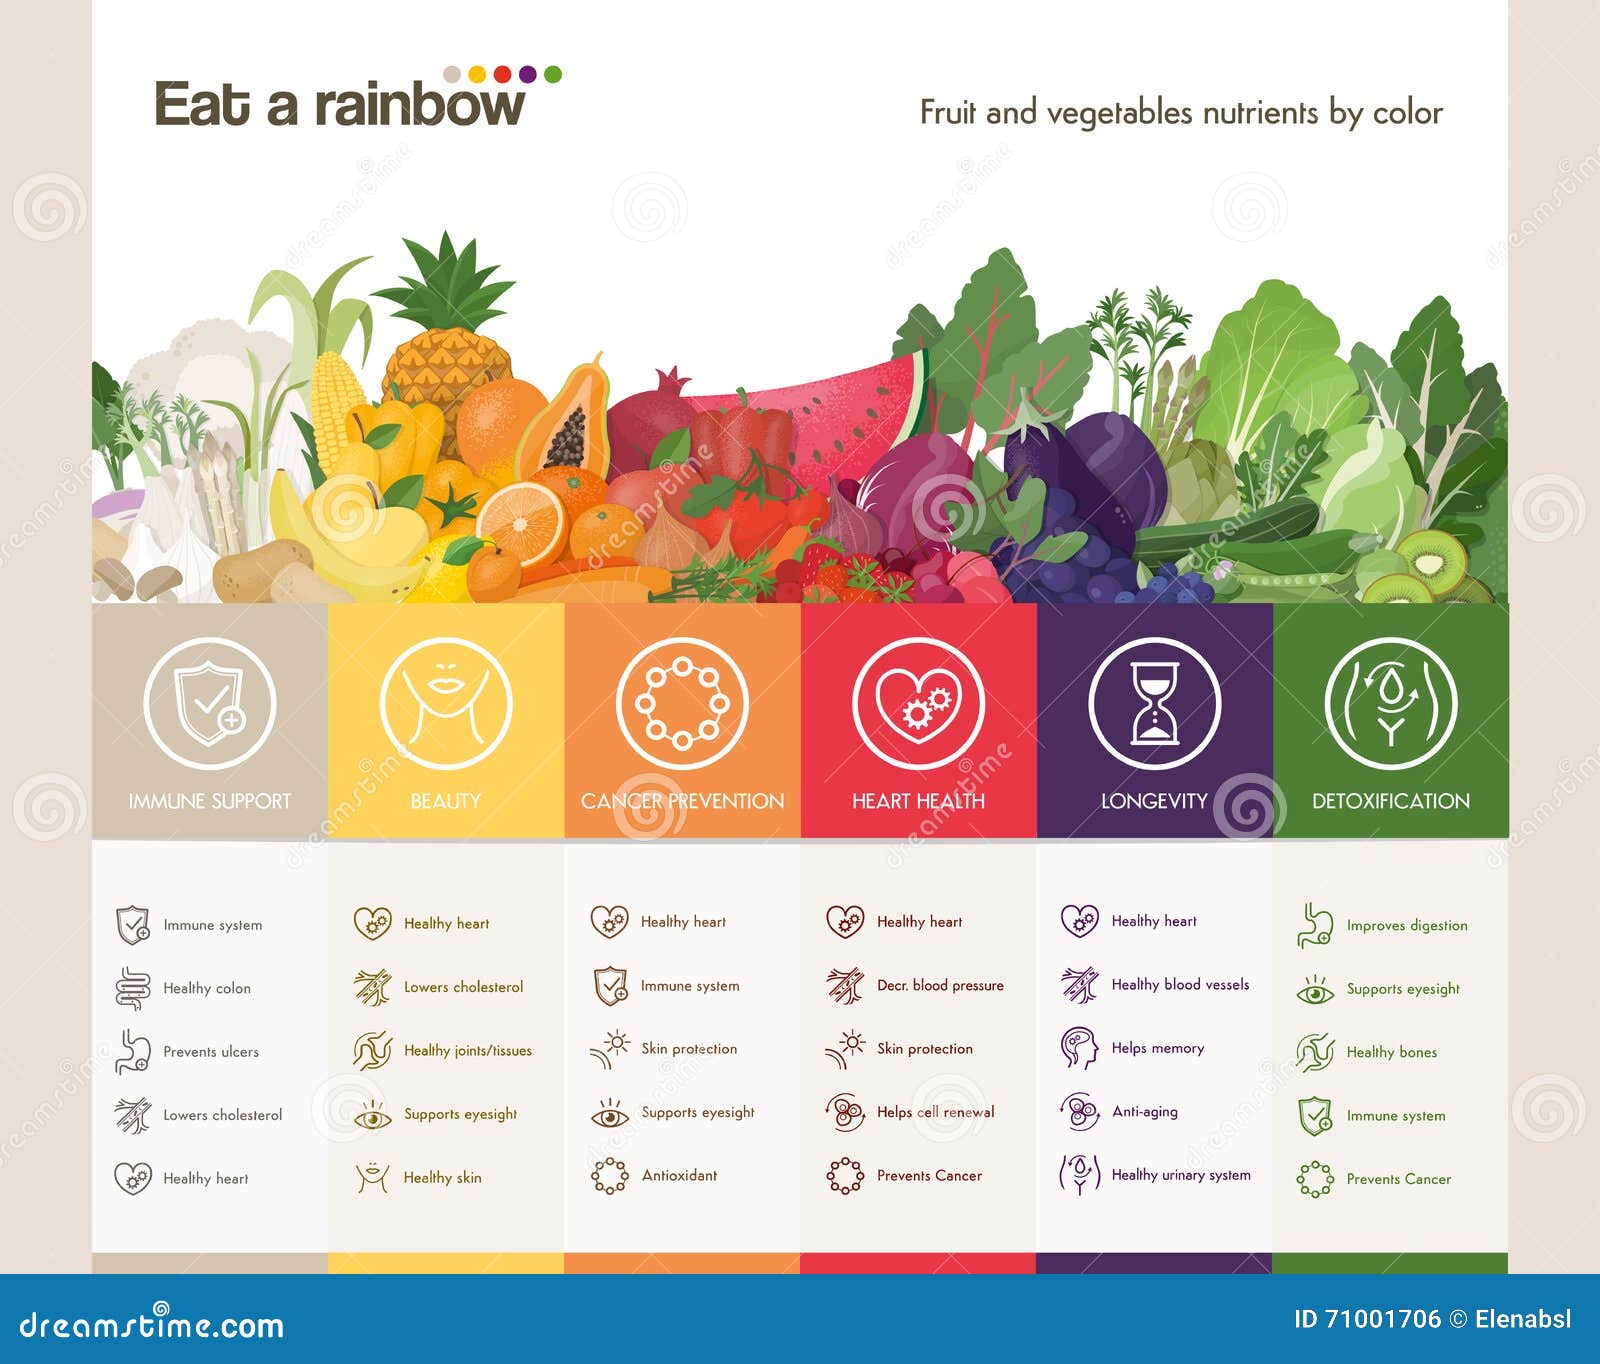 Eat The Rainbow Chart